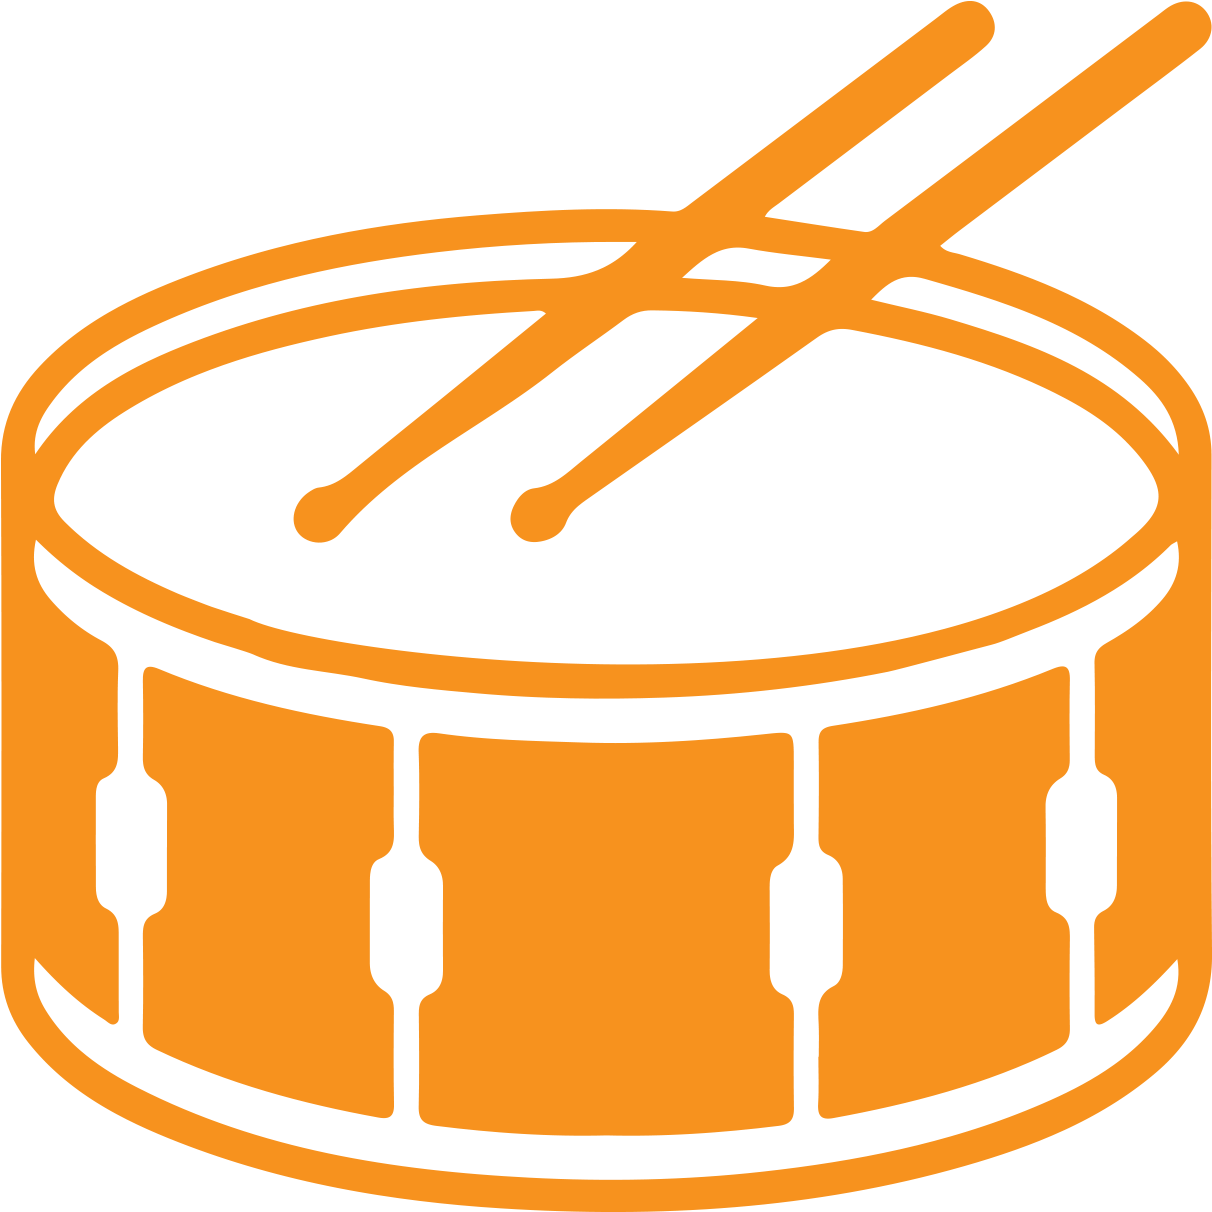 Snare Drum - Snare Drum Line Art (1707x1211)